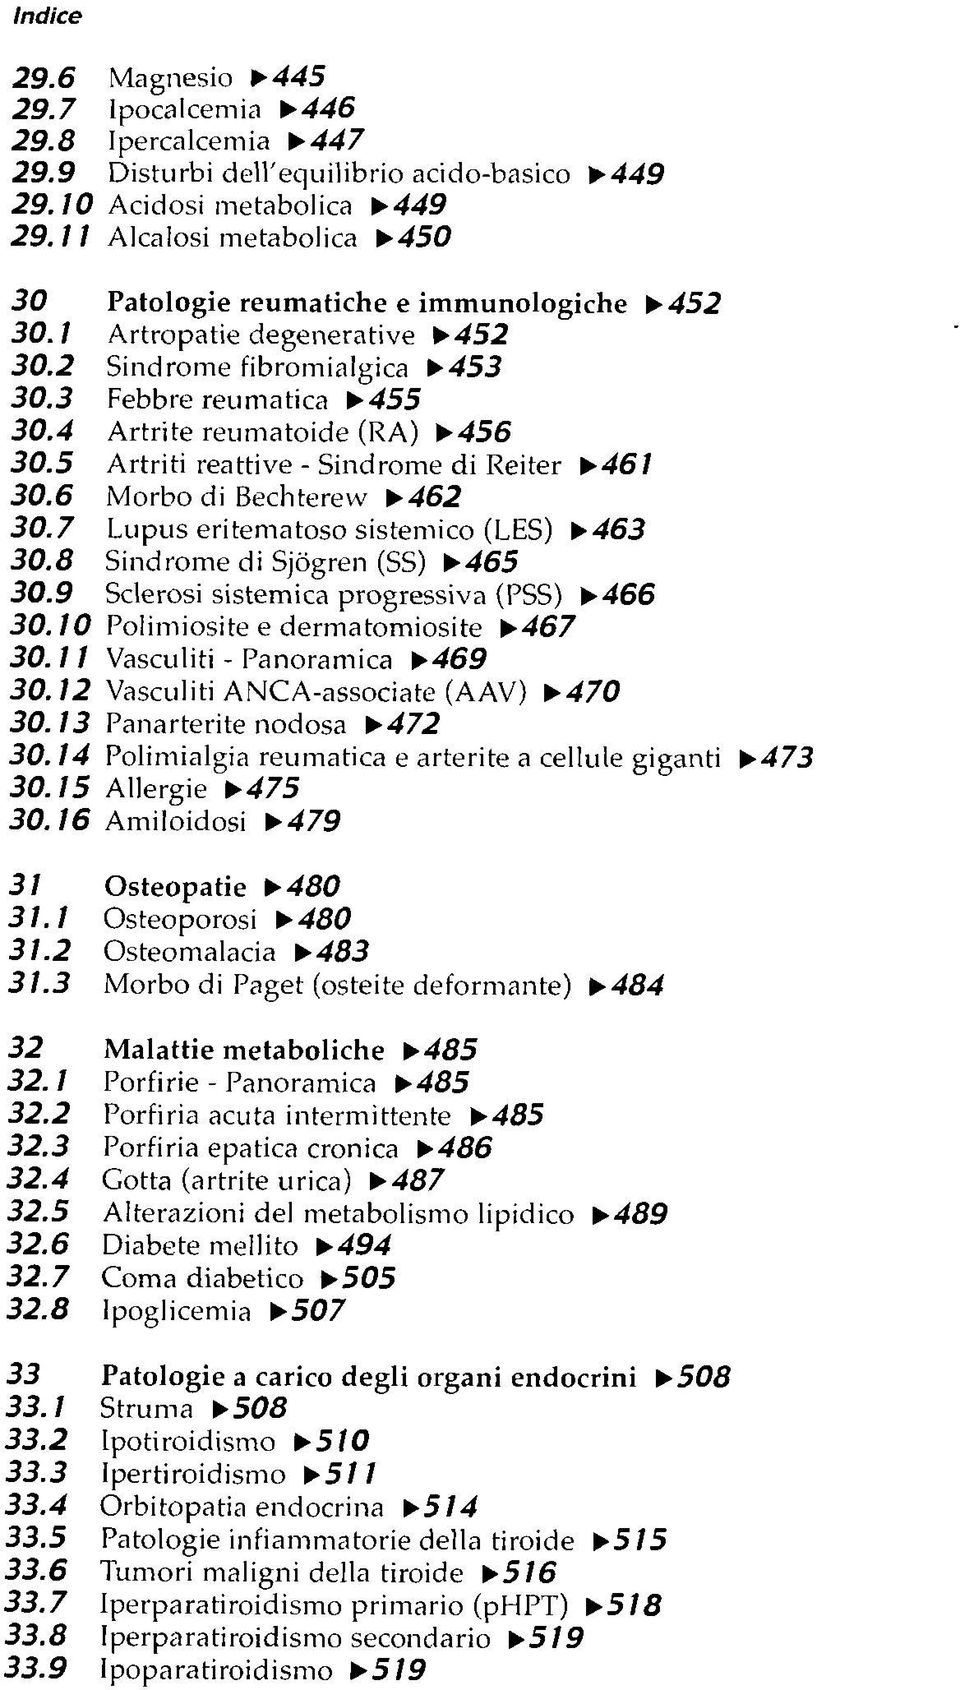 4 Artrite reumatoide (RA) 456 30.5 Artriti reattive - Sindrome di Reiter 461 30.6 Morbo di Bechterew 462 30.7 Lupus eritematoso sistemico (LES) 463 30.8 Sindrome di Sjògren (SS) 465 30.